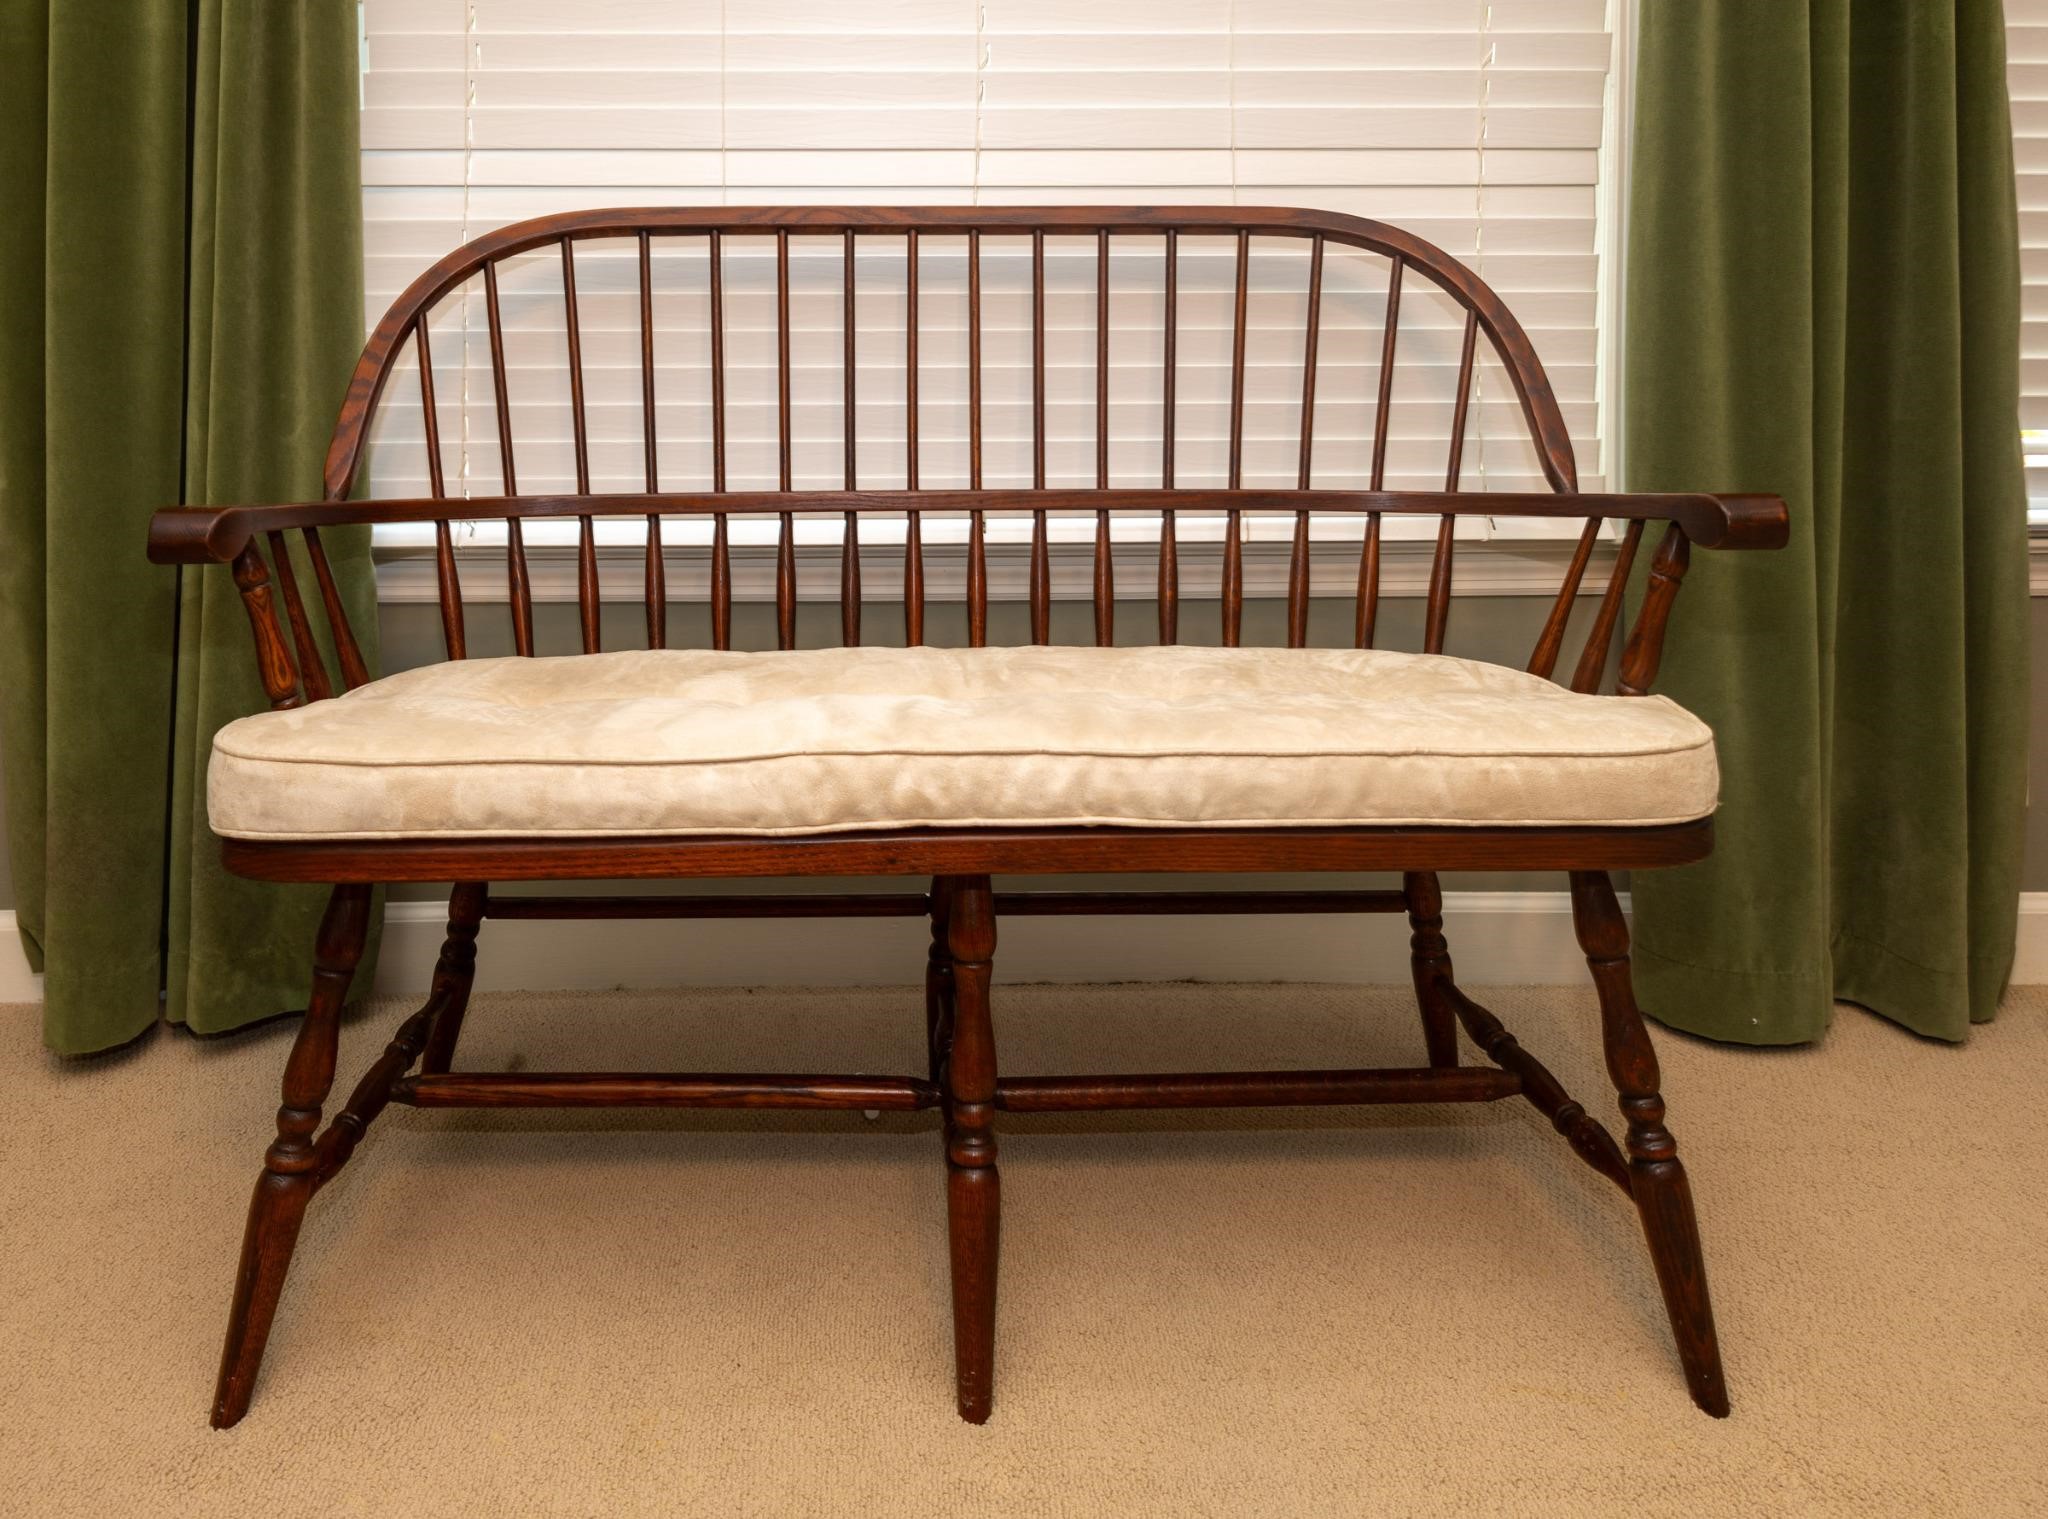 Smithboro Furniture Windsor-style bench